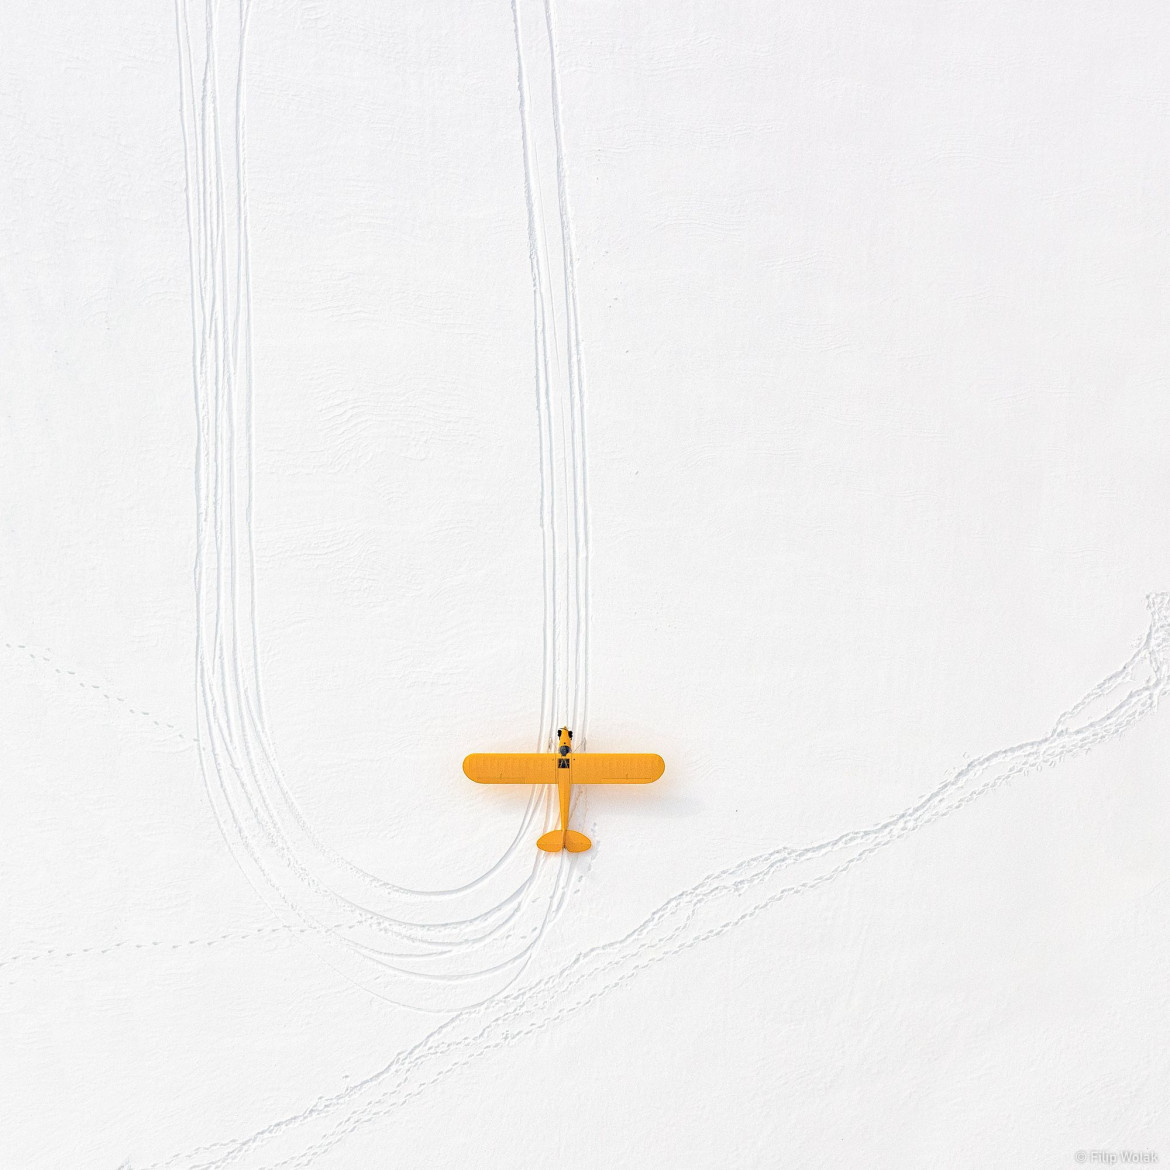 fot. Filip Wolak "Yellow Plane"